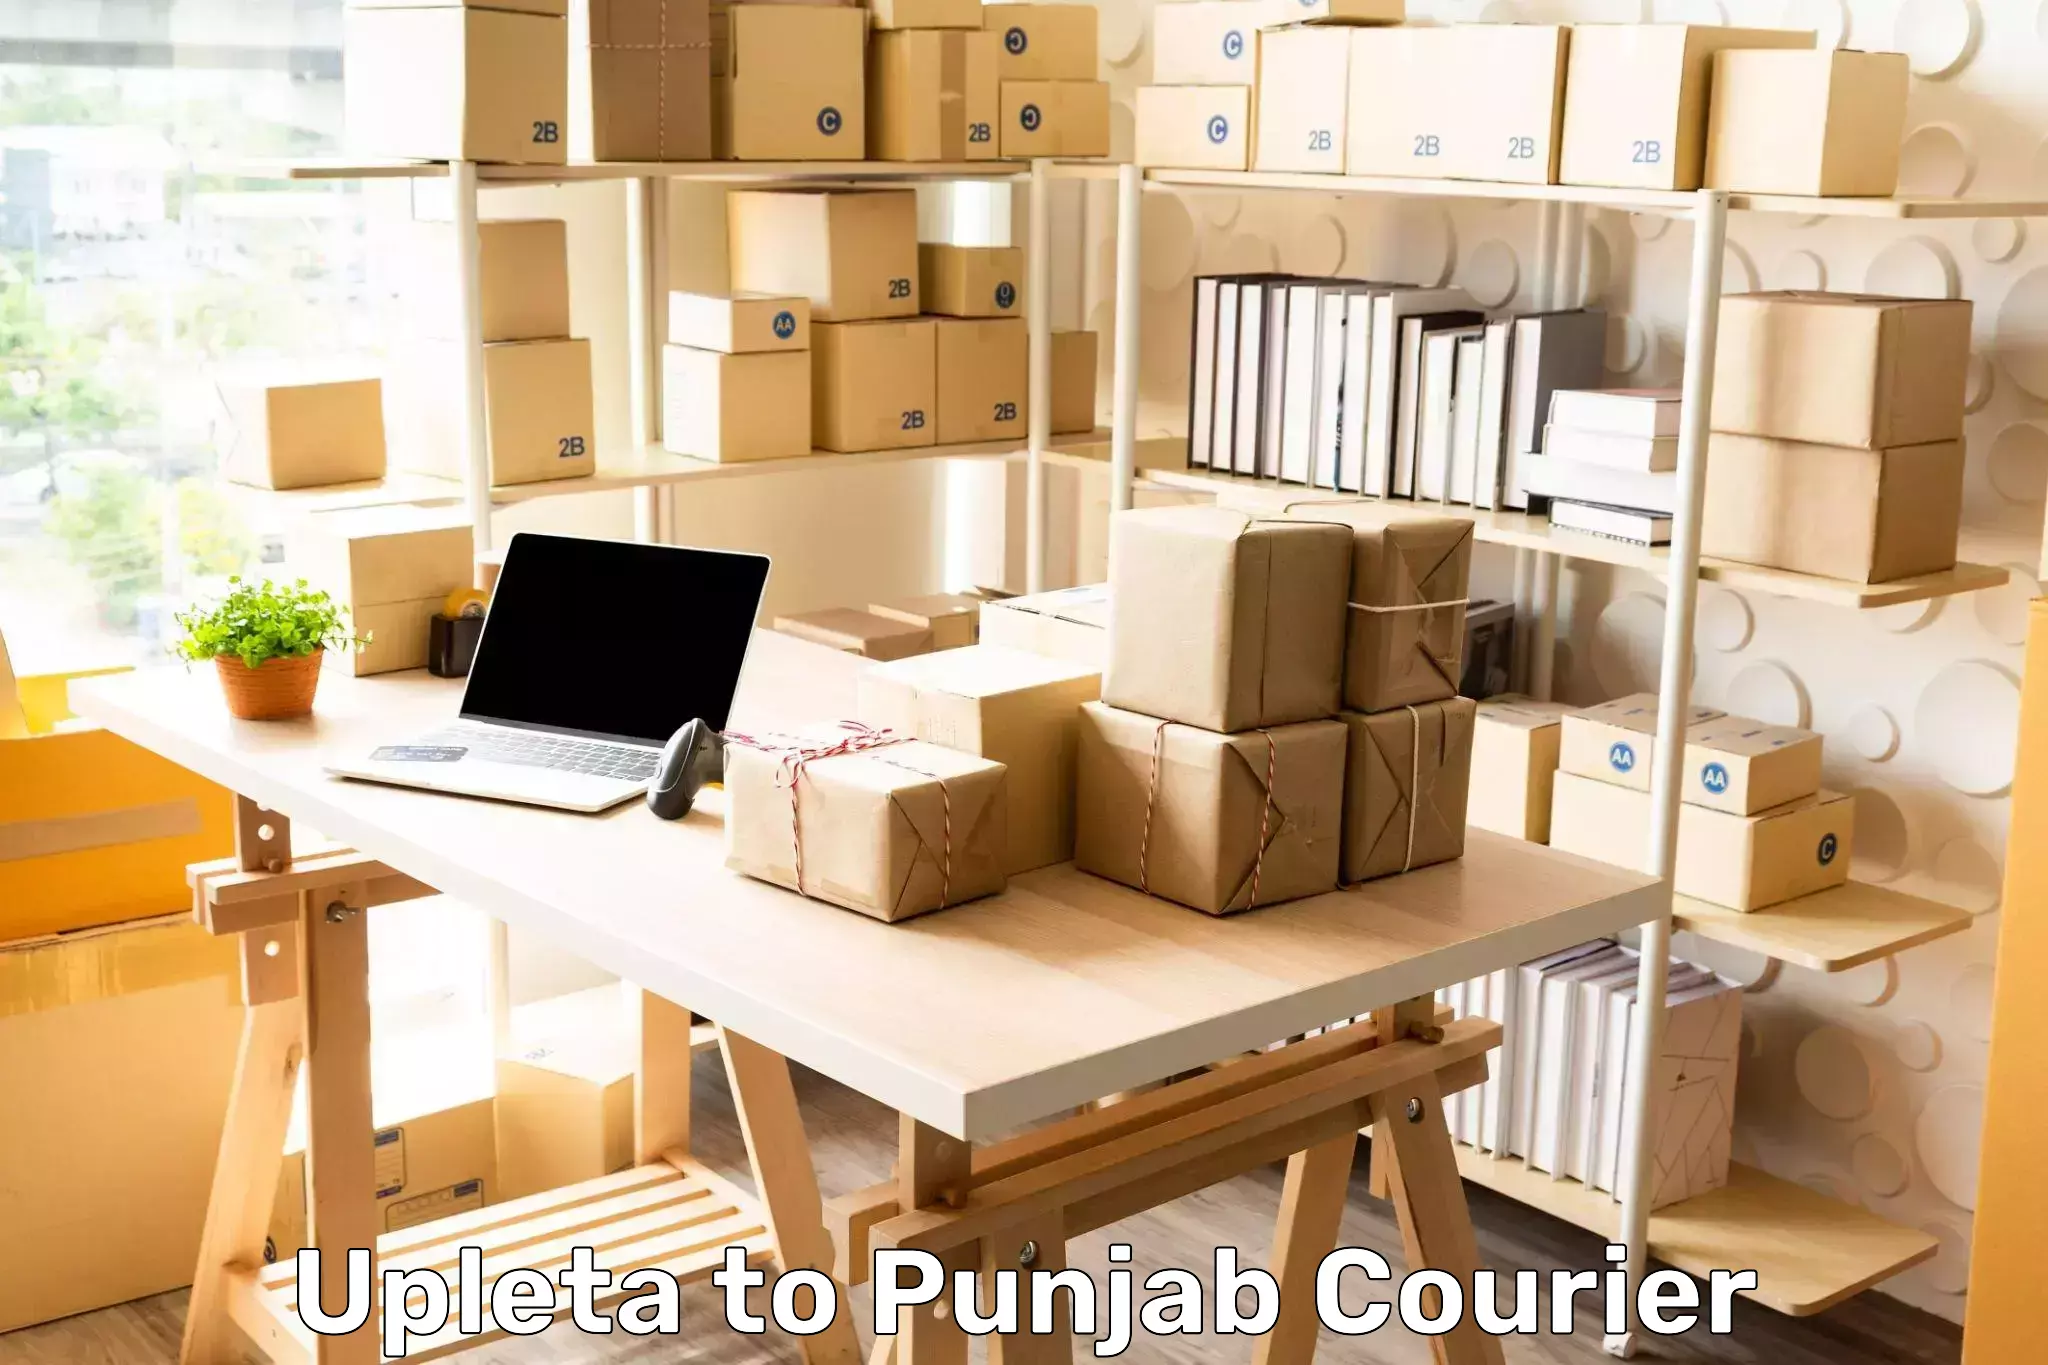 Urban courier service Upleta to Punjab